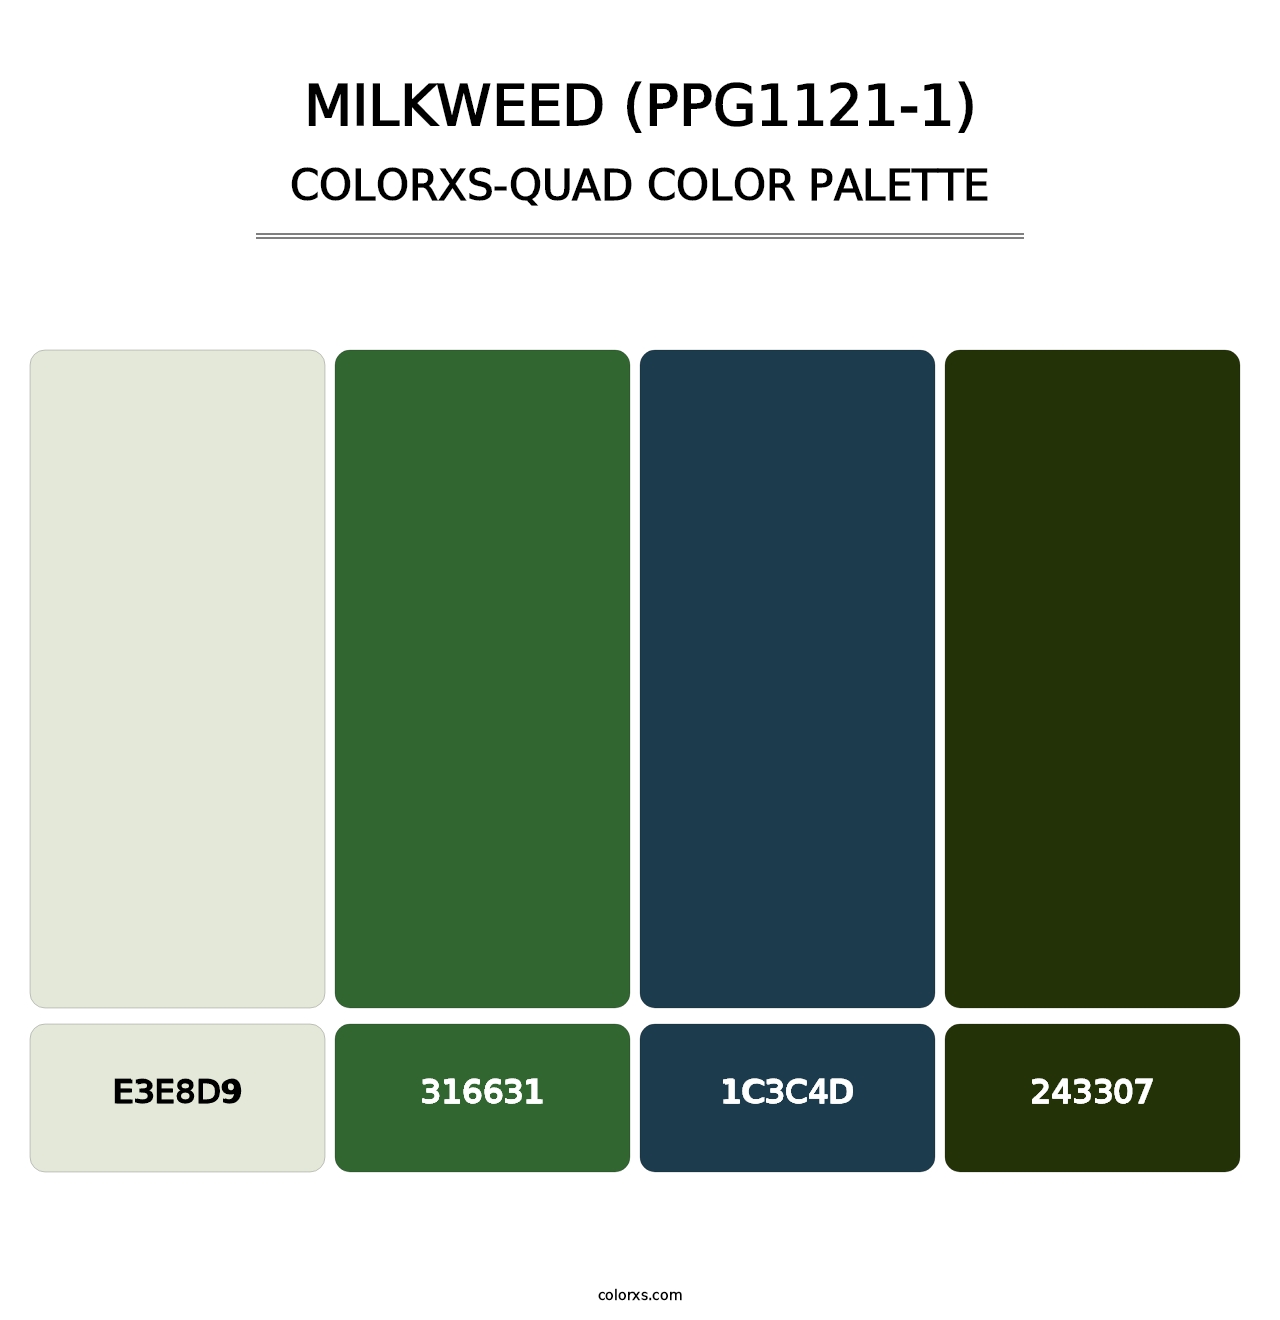 Milkweed (PPG1121-1) - Colorxs Quad Palette